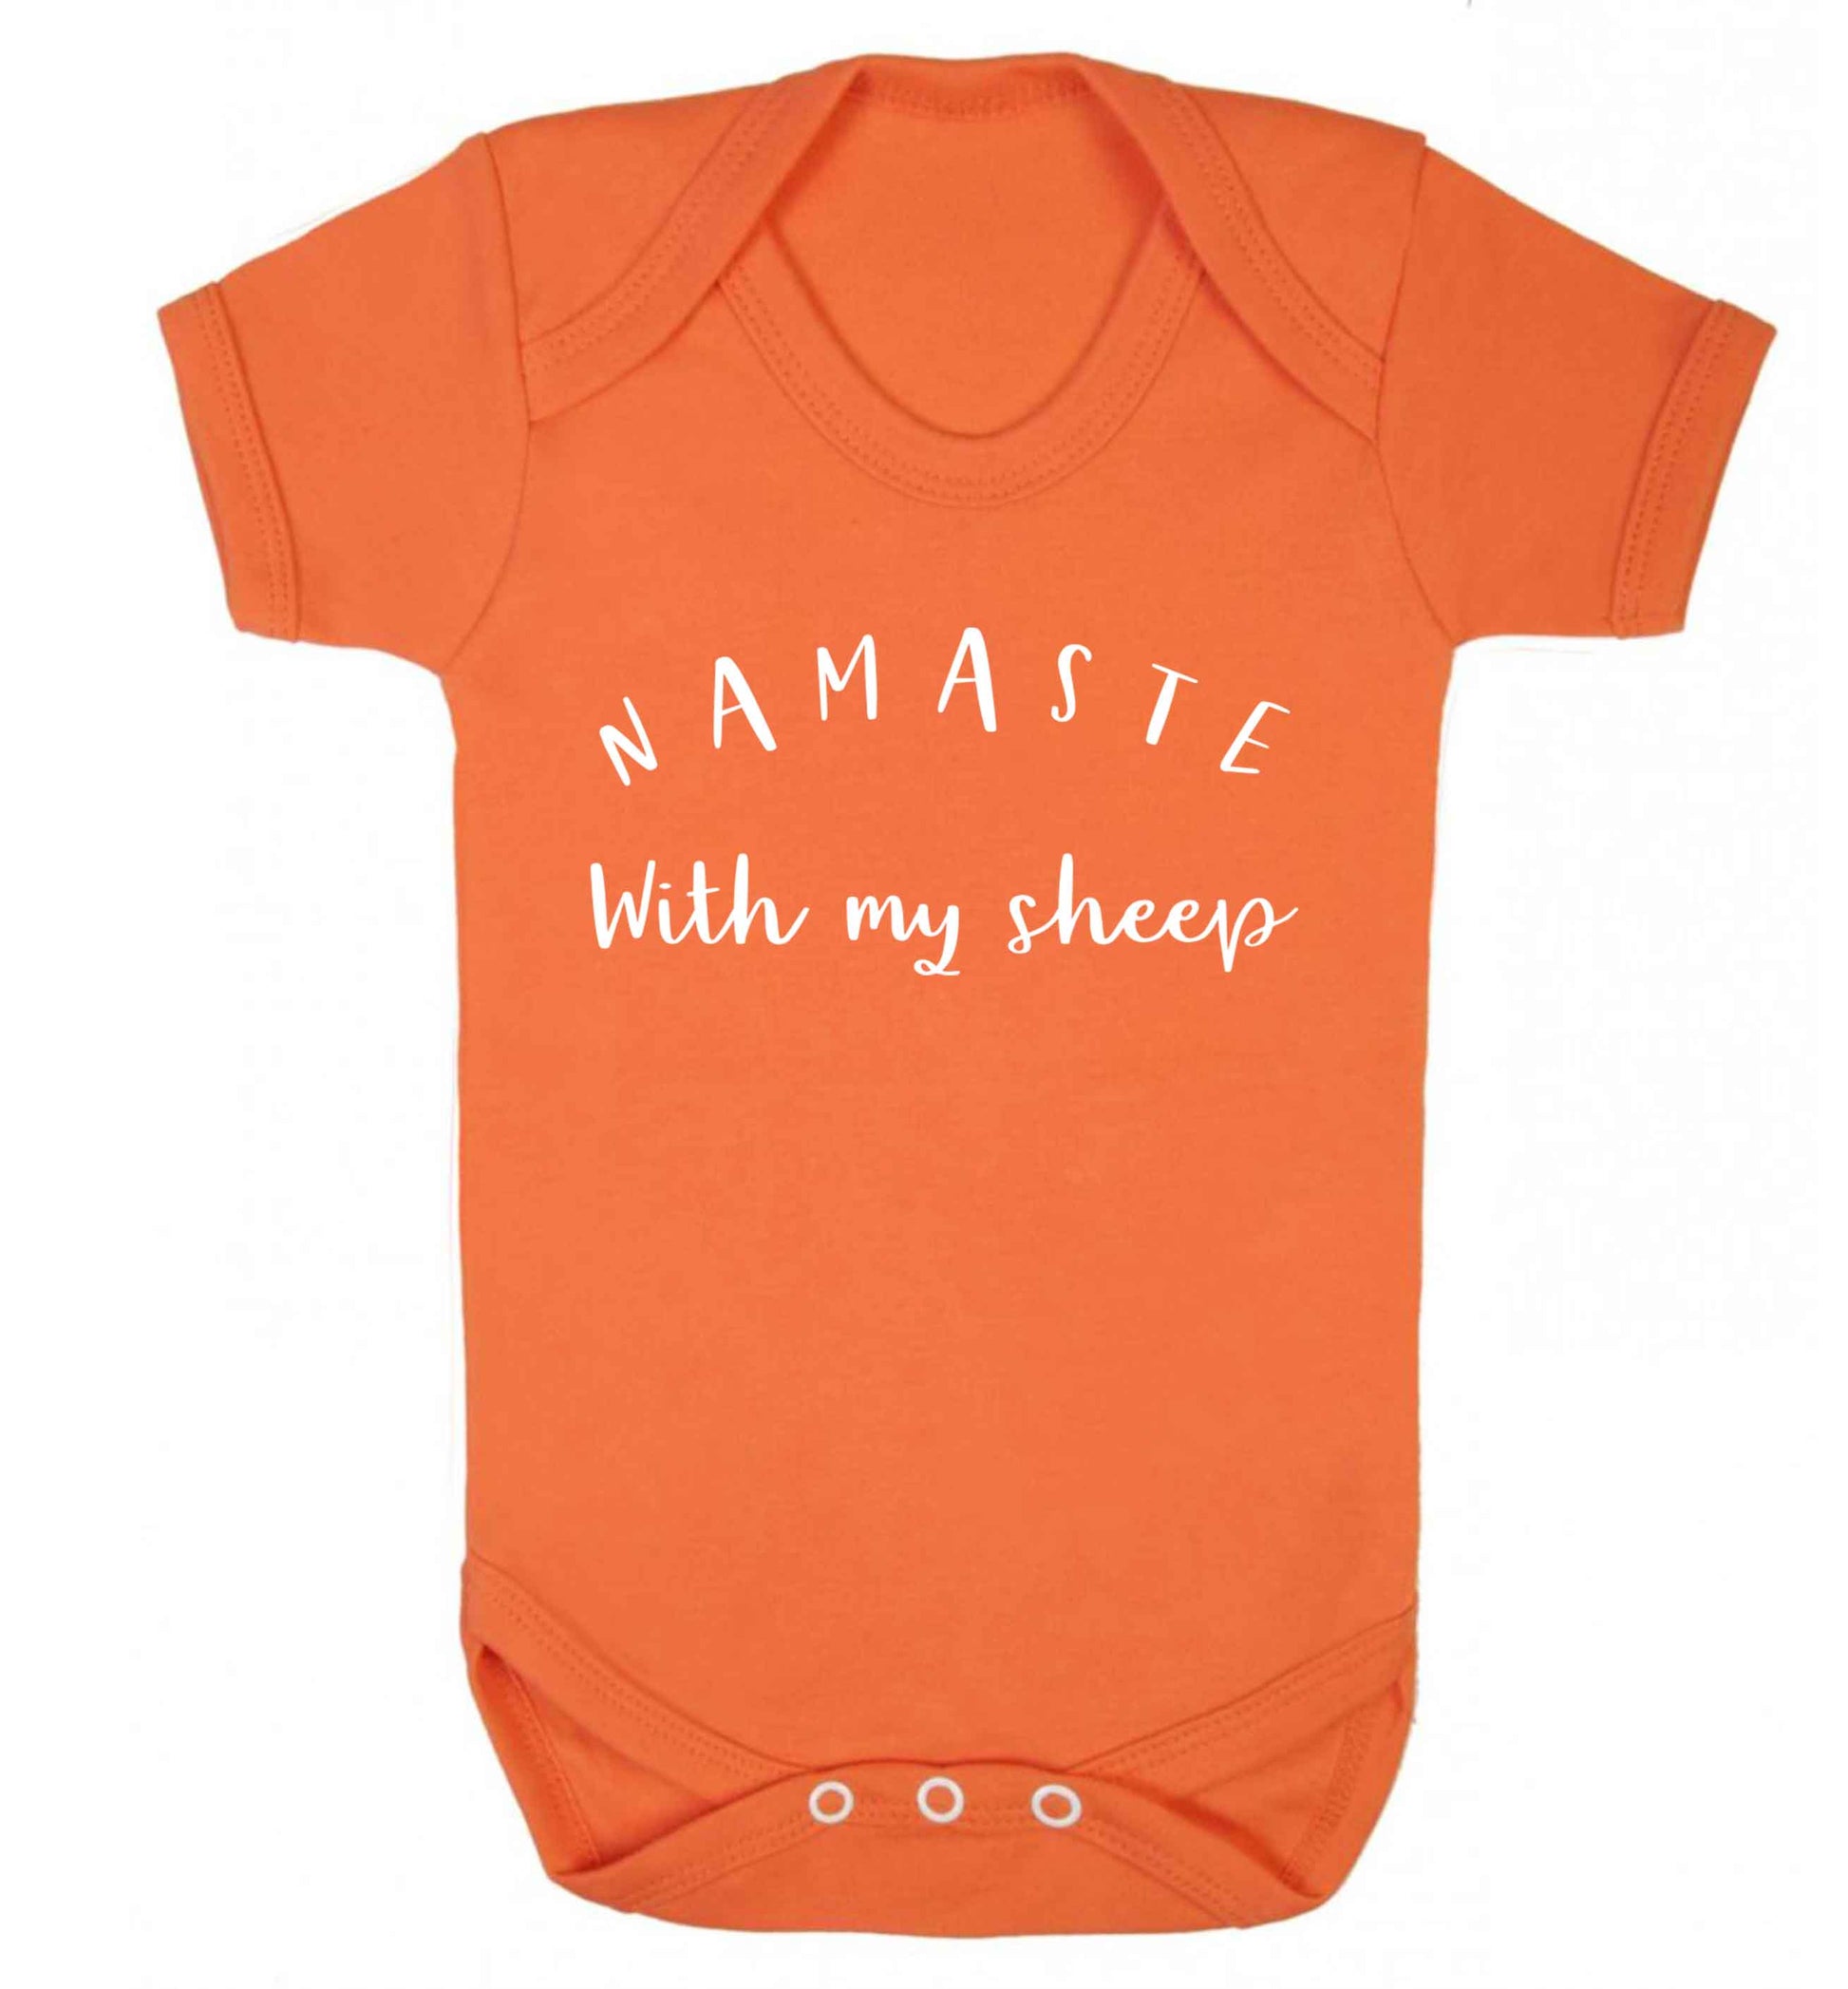 Namaste with my sheep Baby Vest orange 18-24 months